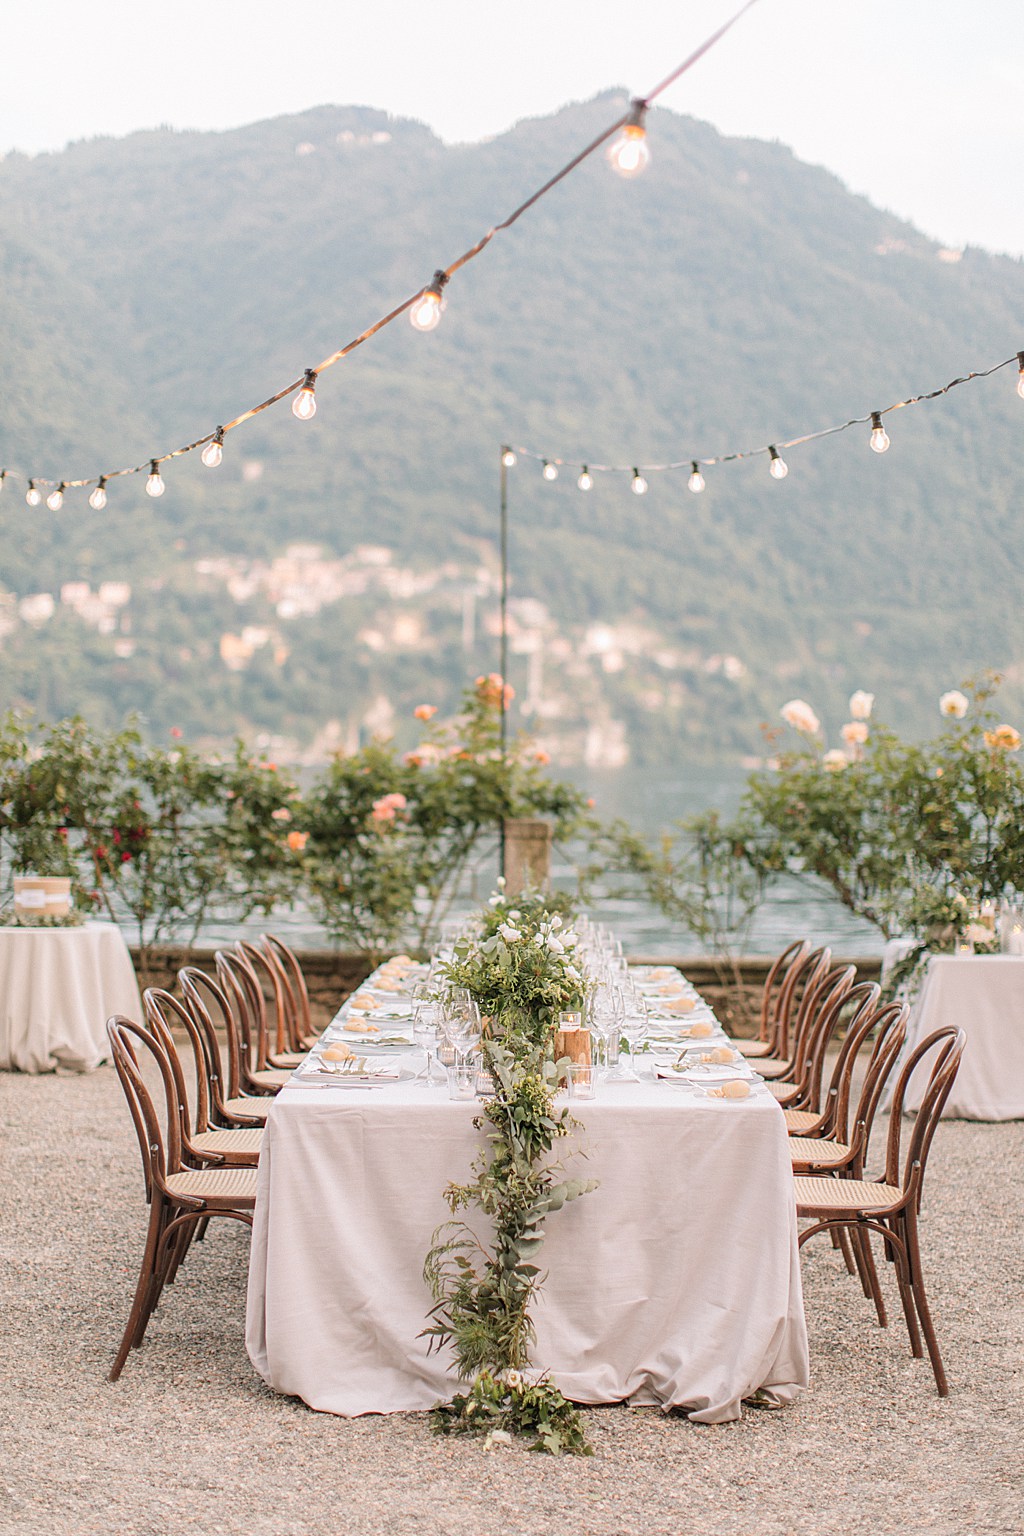 Villa Pizzo Dinner Set Up - Lake Como.